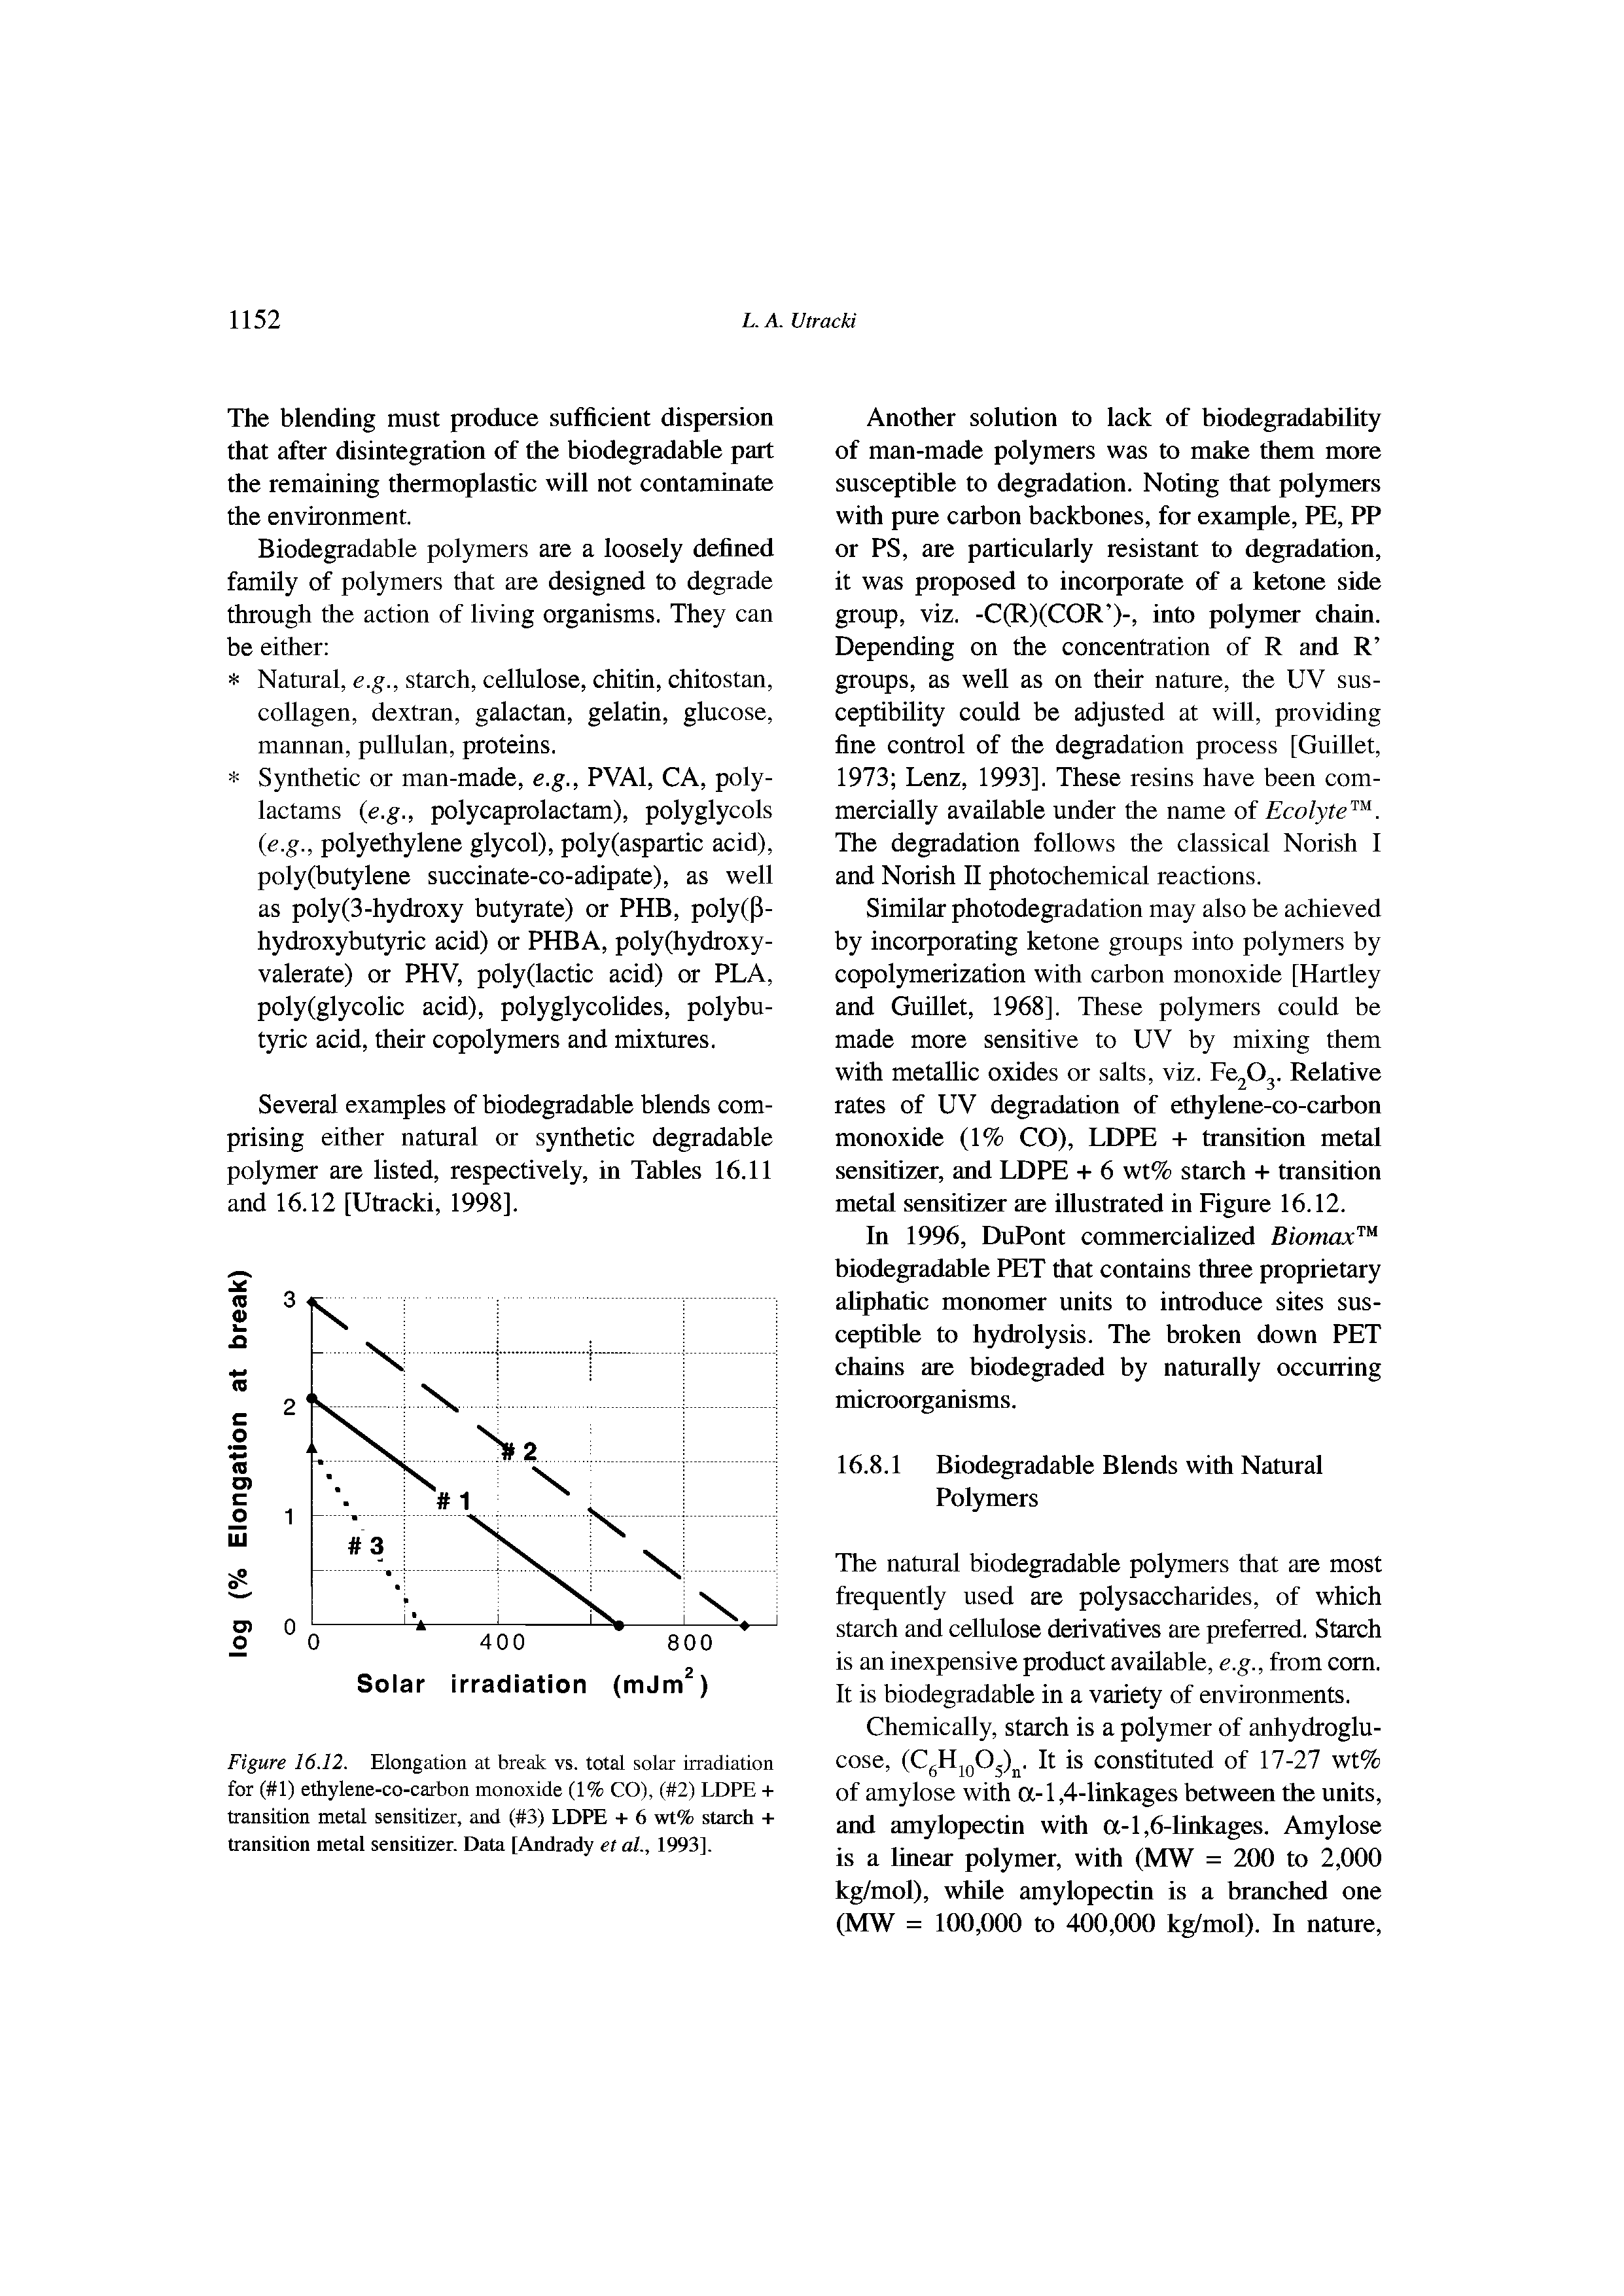 Figure 16.12. Elongation at break vs. total solar irradiation for ( 1) ethylene-co-carbon monoxide (1% CO), ( 2) LDPE + transition metal sensitizer, and ( 3) LDPE + 6 wt% starch + transition metal sensitizer. Data [Andrady et at., 1993].